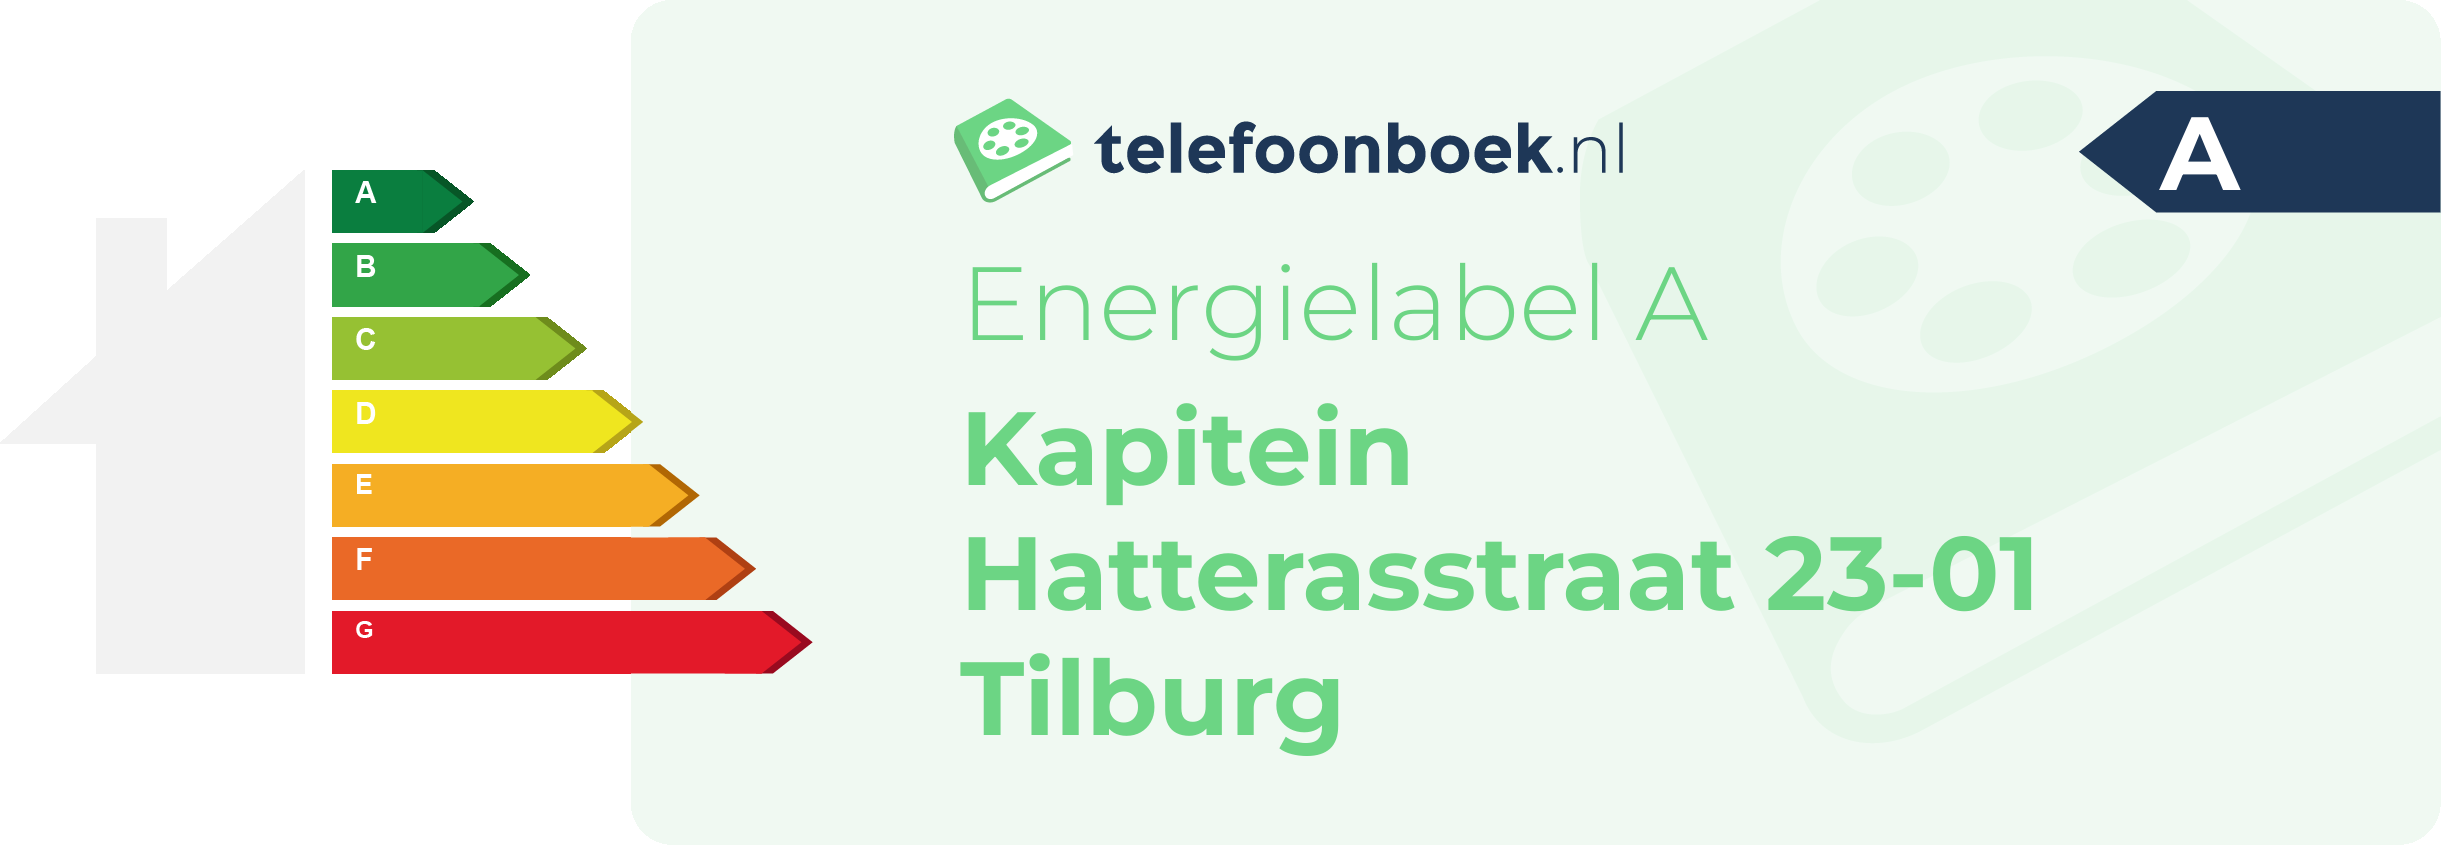 Energielabel Kapitein Hatterasstraat 23-01 Tilburg